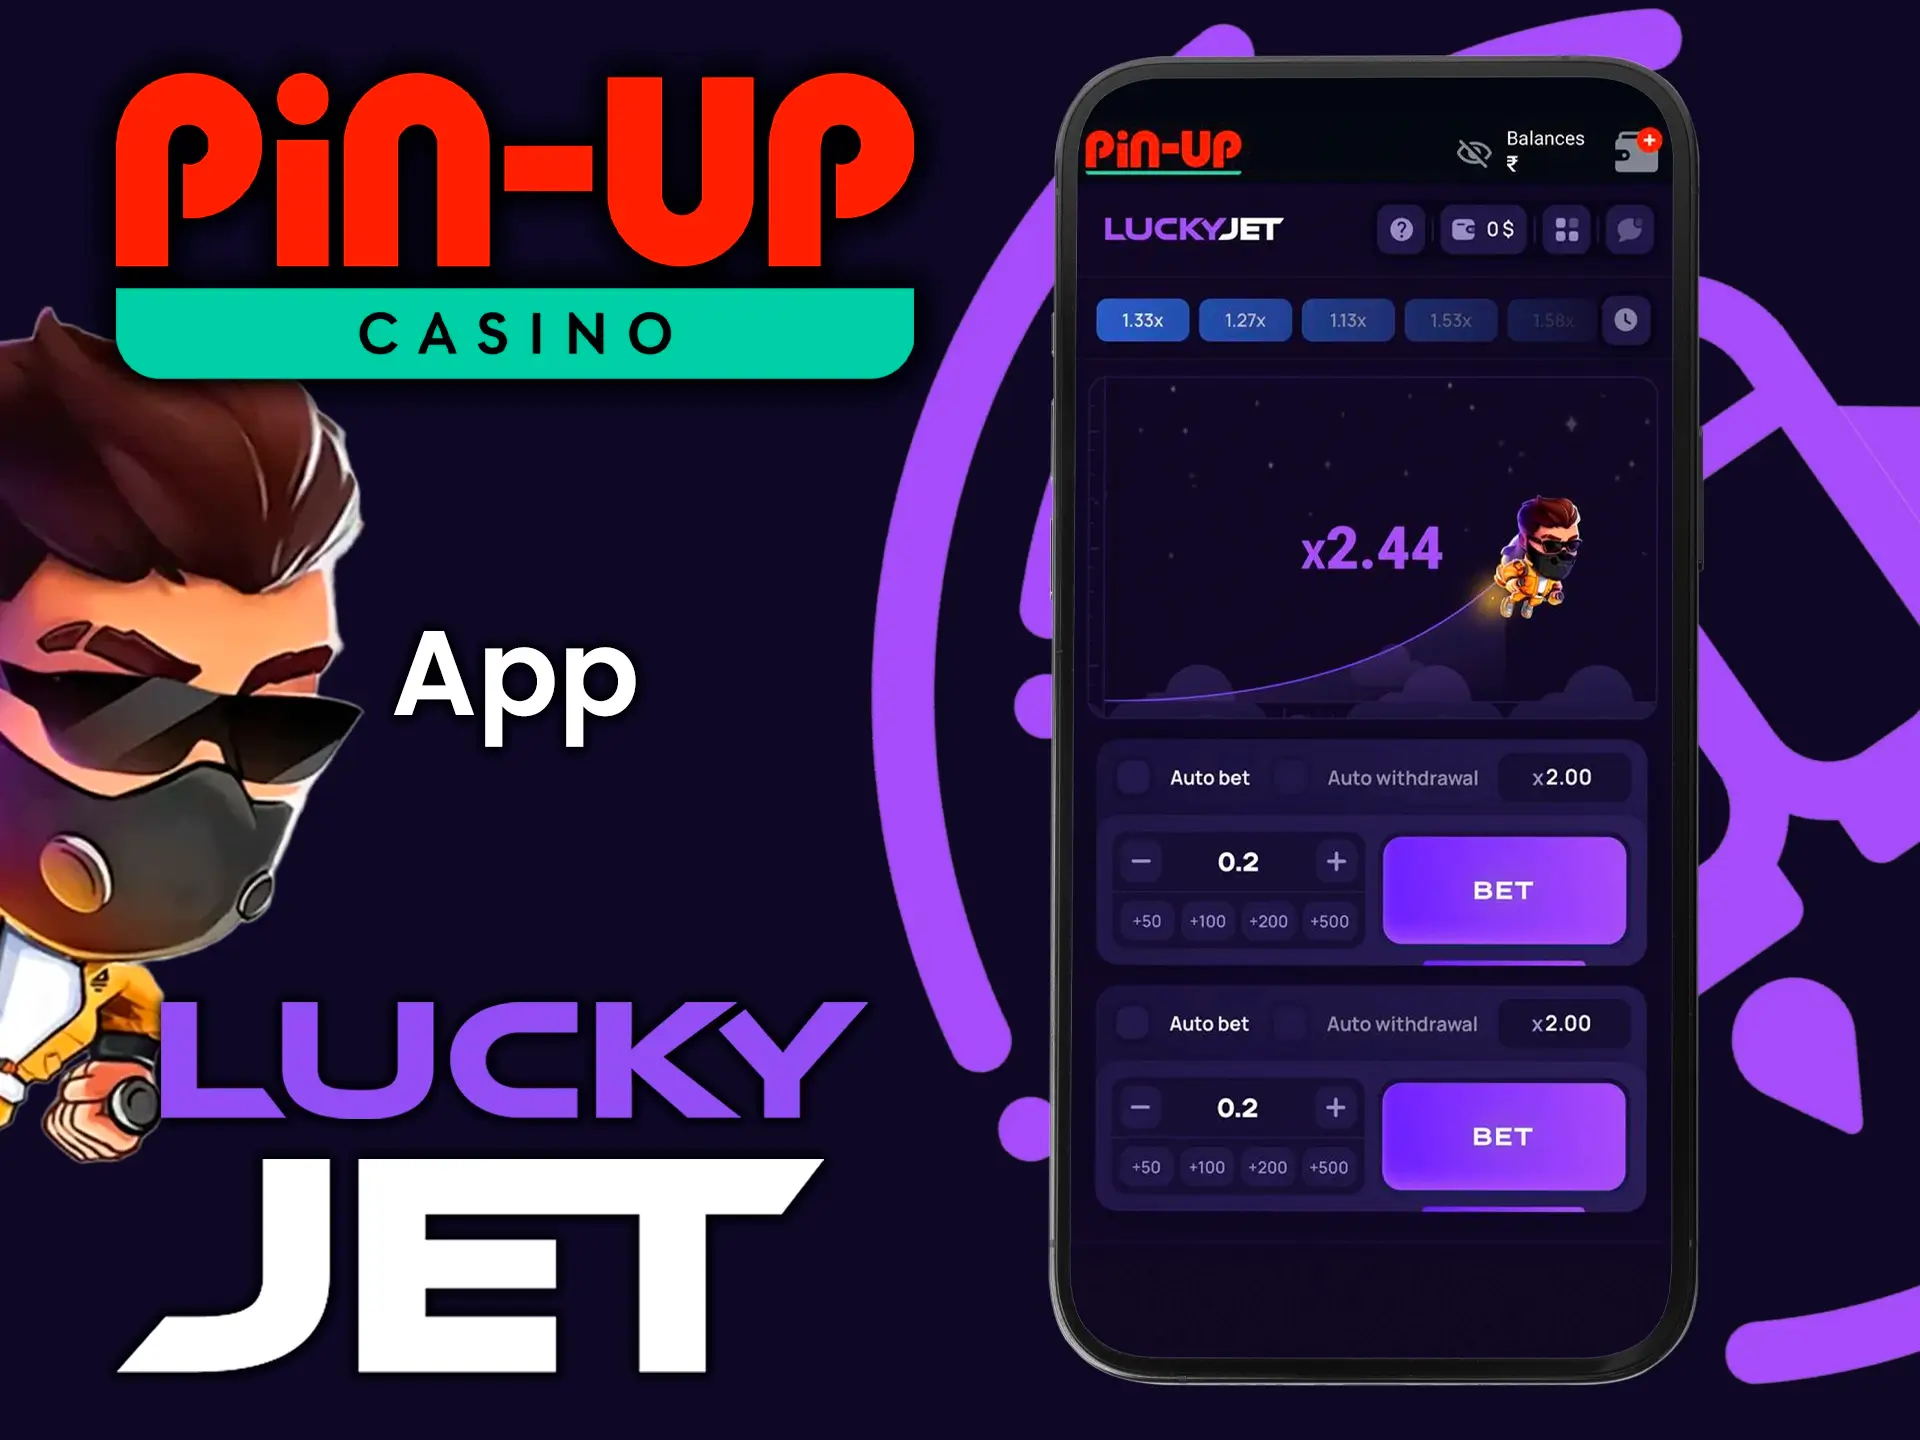 Play Lucky Jet through the Pin Up app.